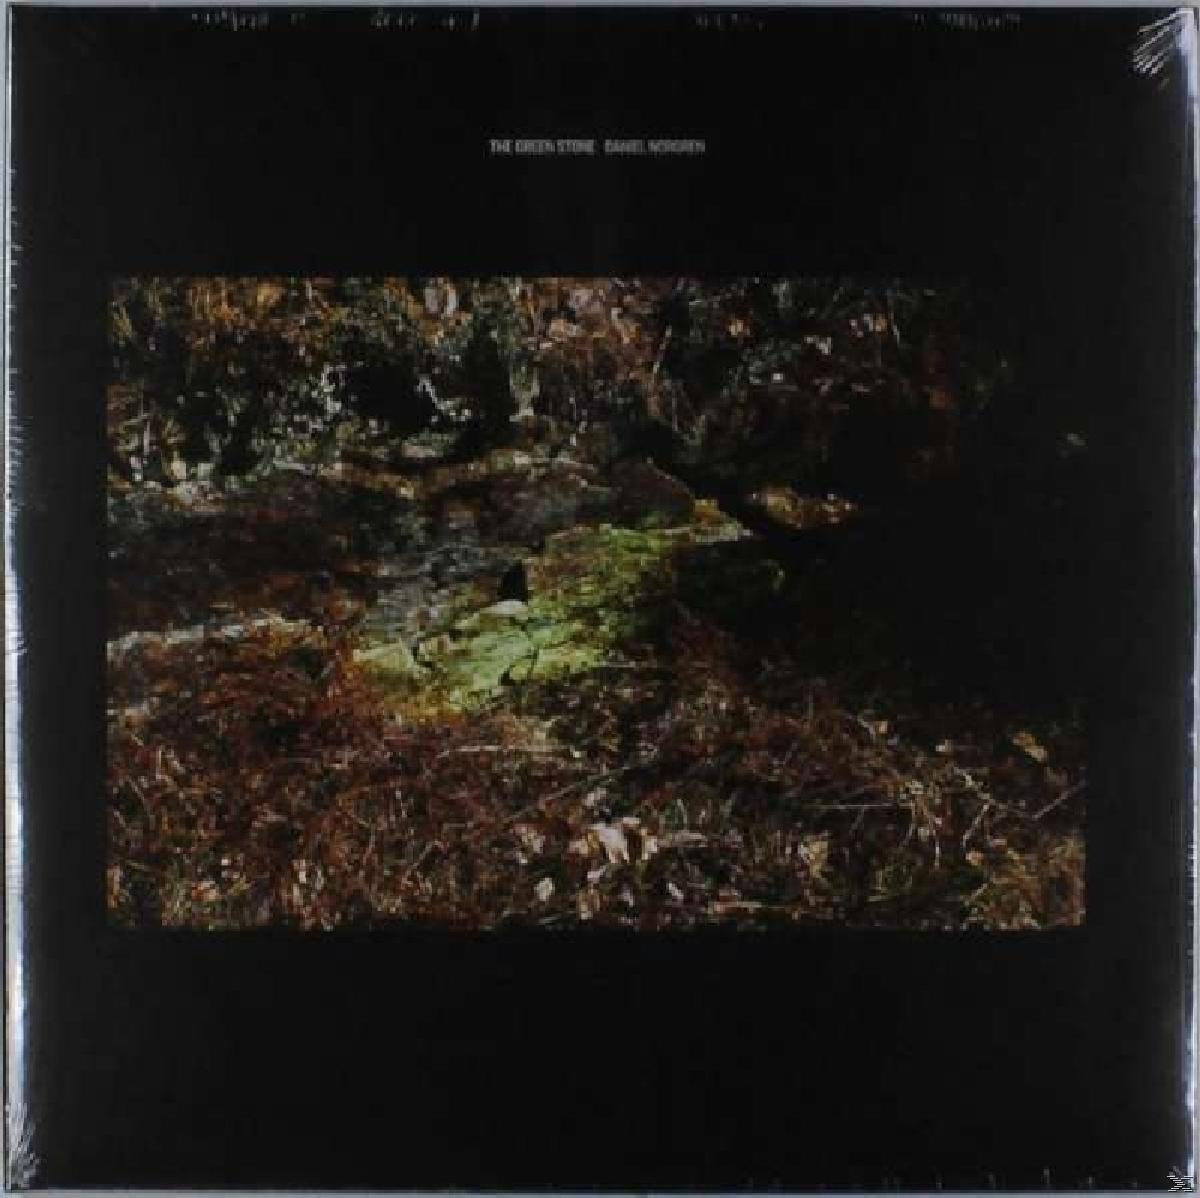 The - Stone Green (Vinyl) Daniel Norgren -